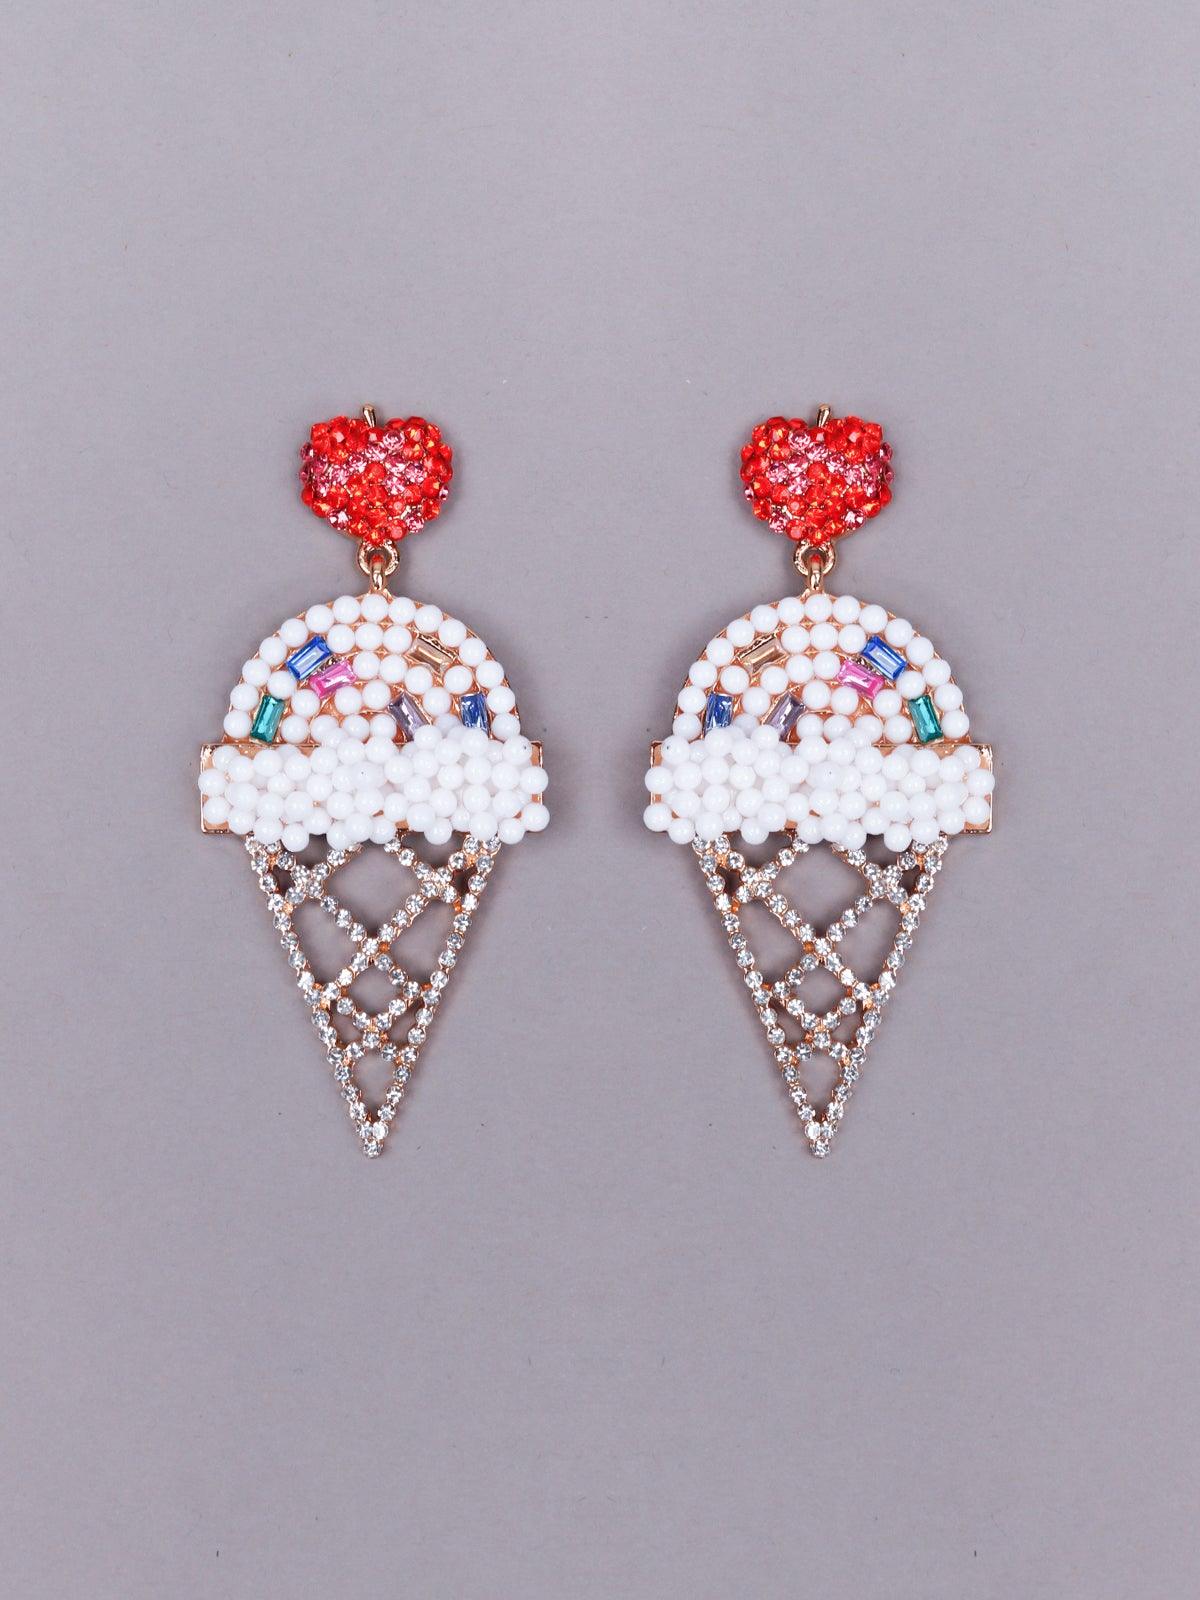 Cute studded ice-cream cone earrings - Odette